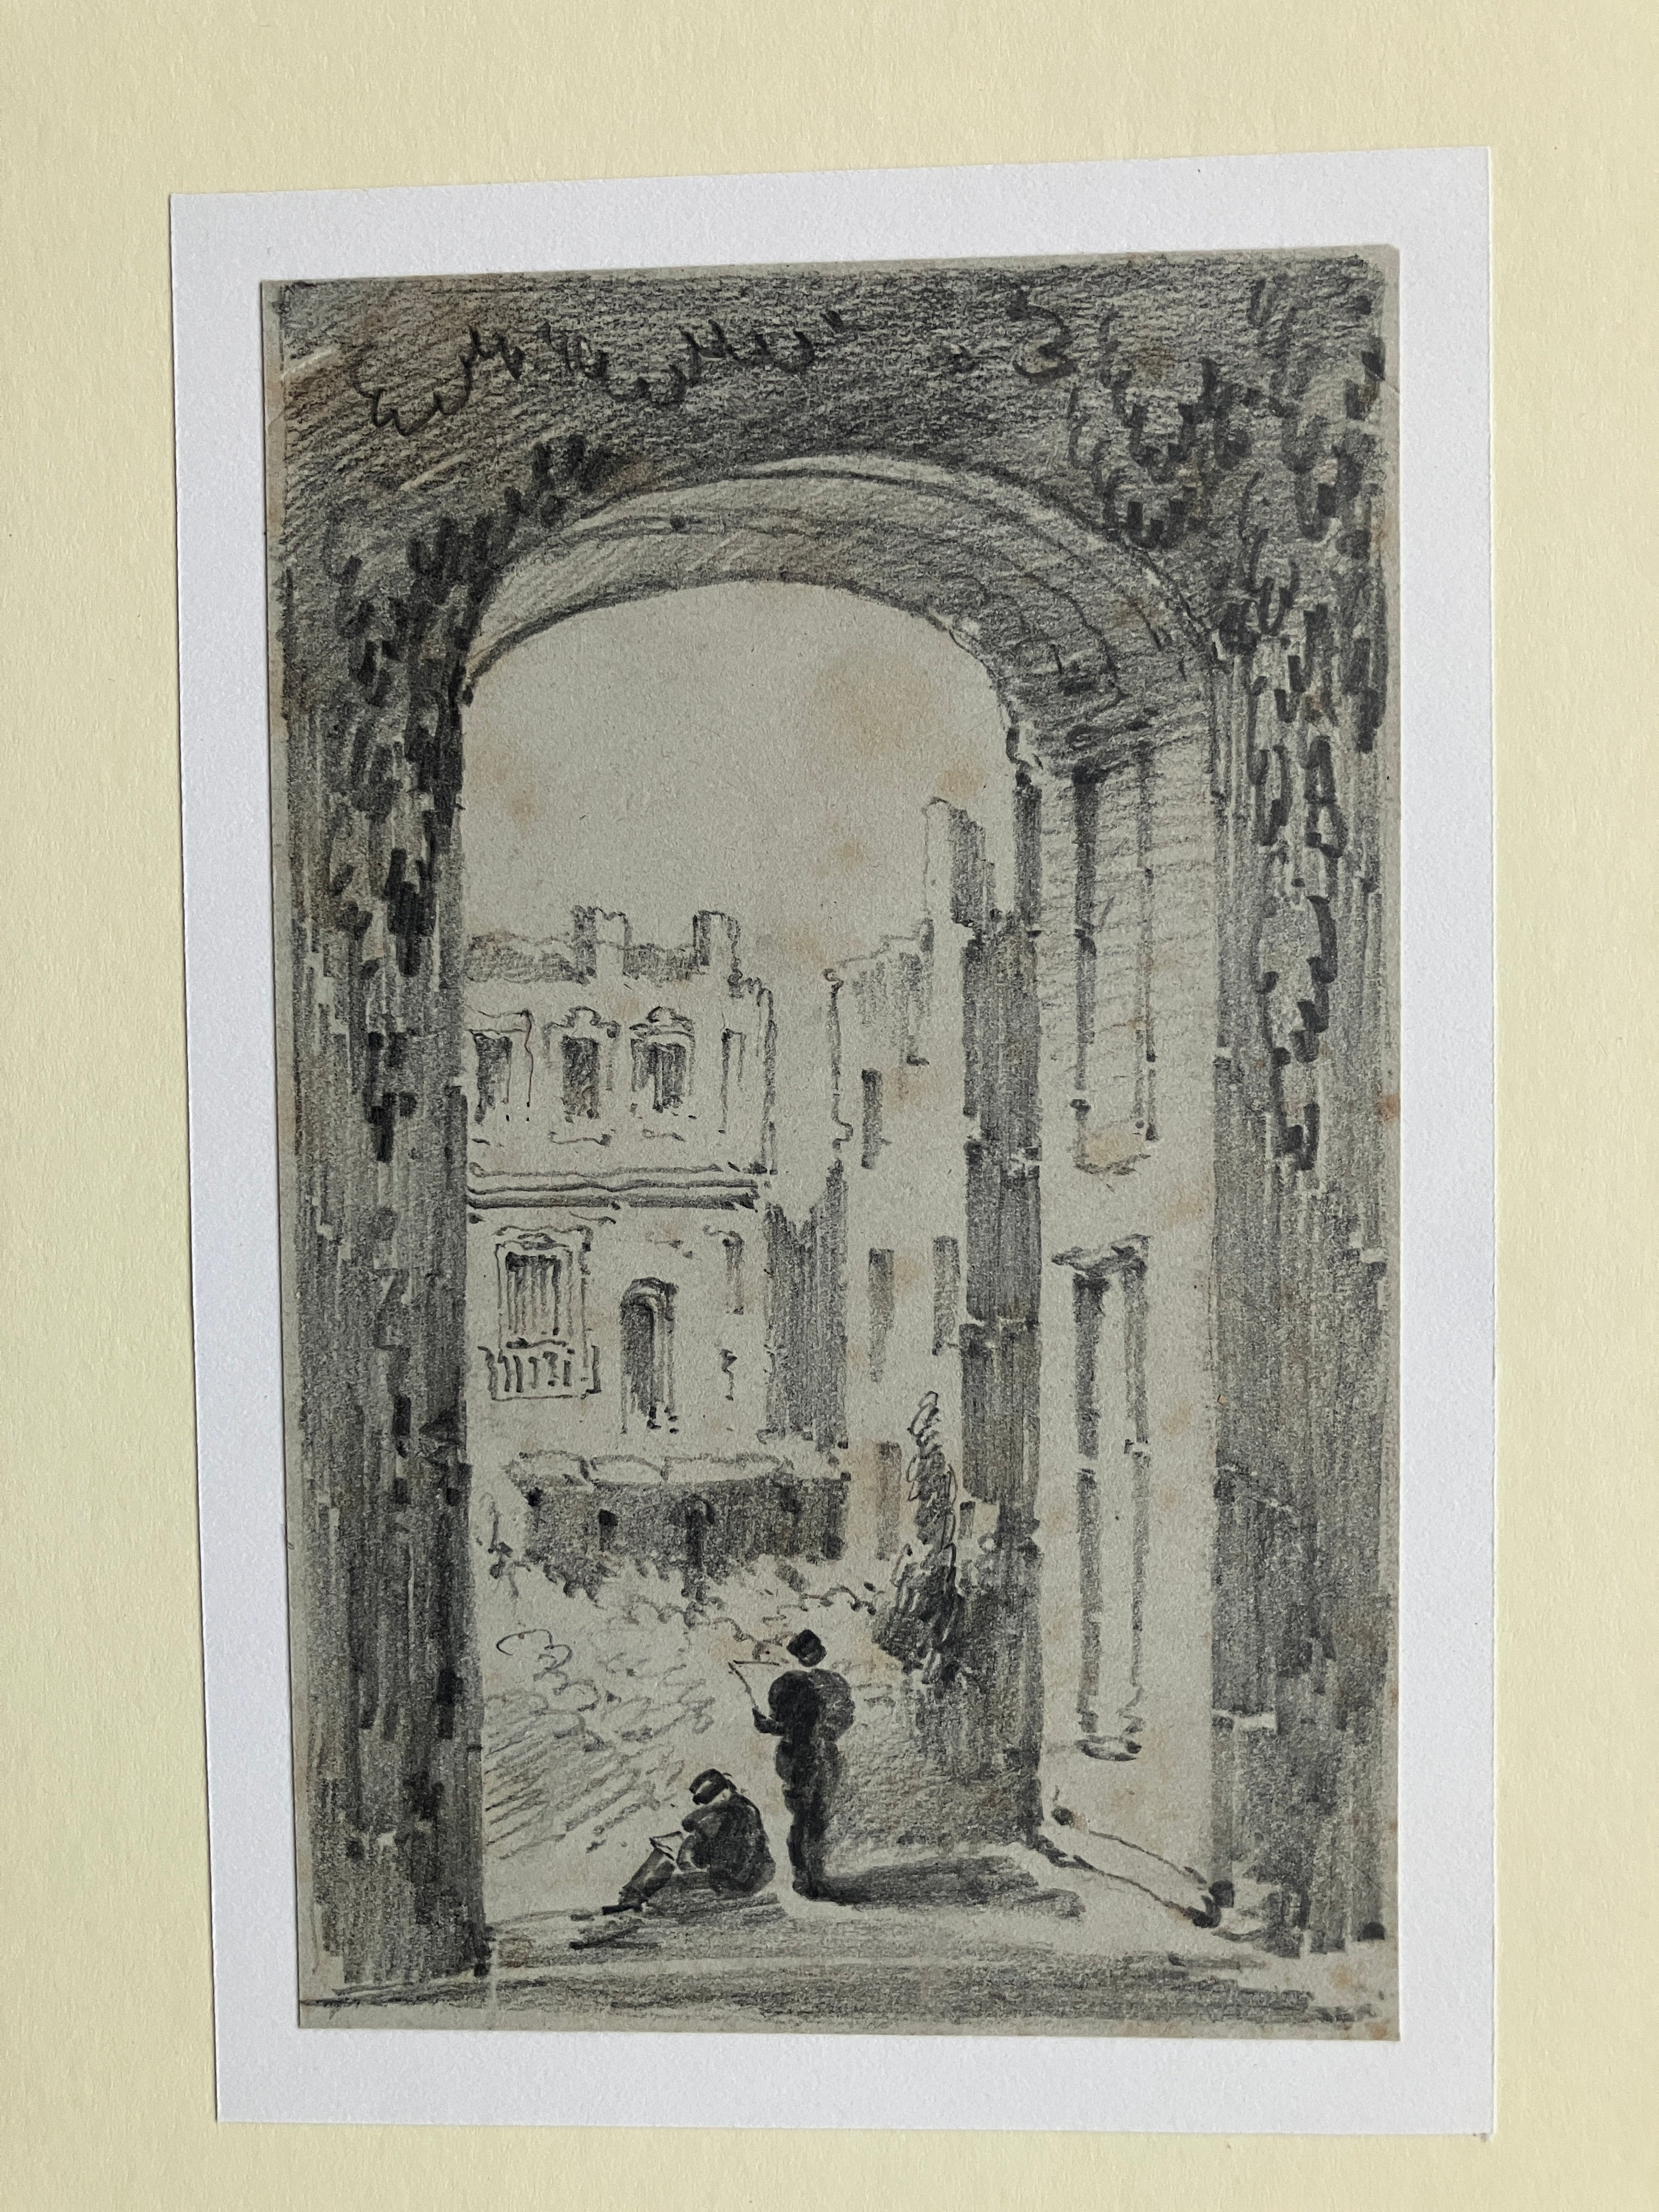 James Bourne circa 1797 – Courtyard Archway